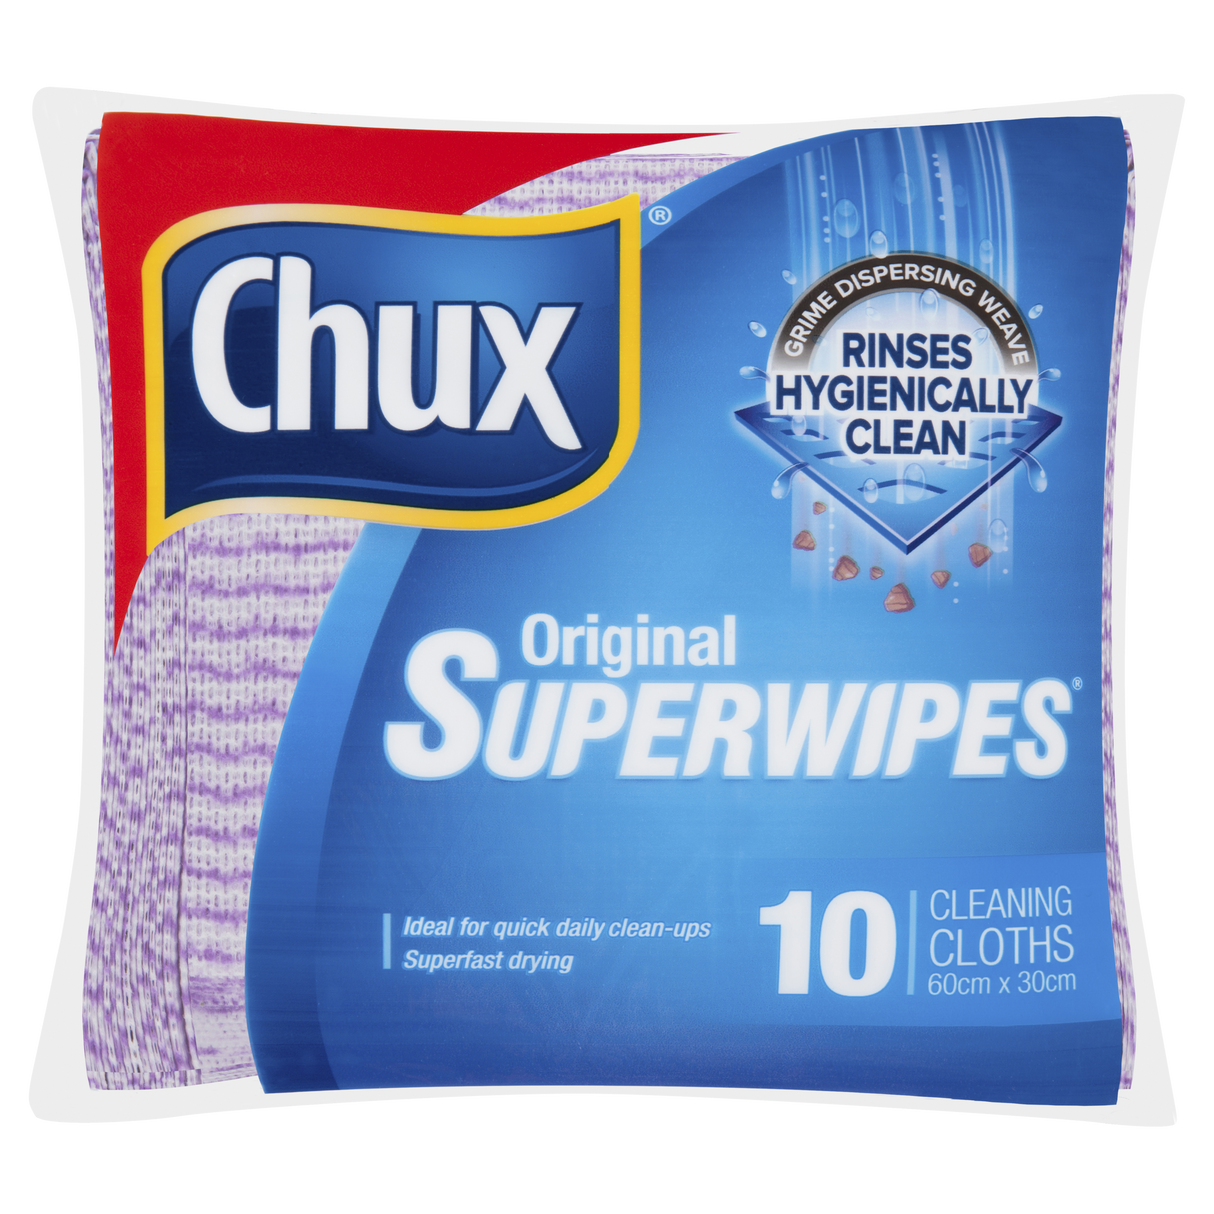 Chux Original Superwipes 10 Pack